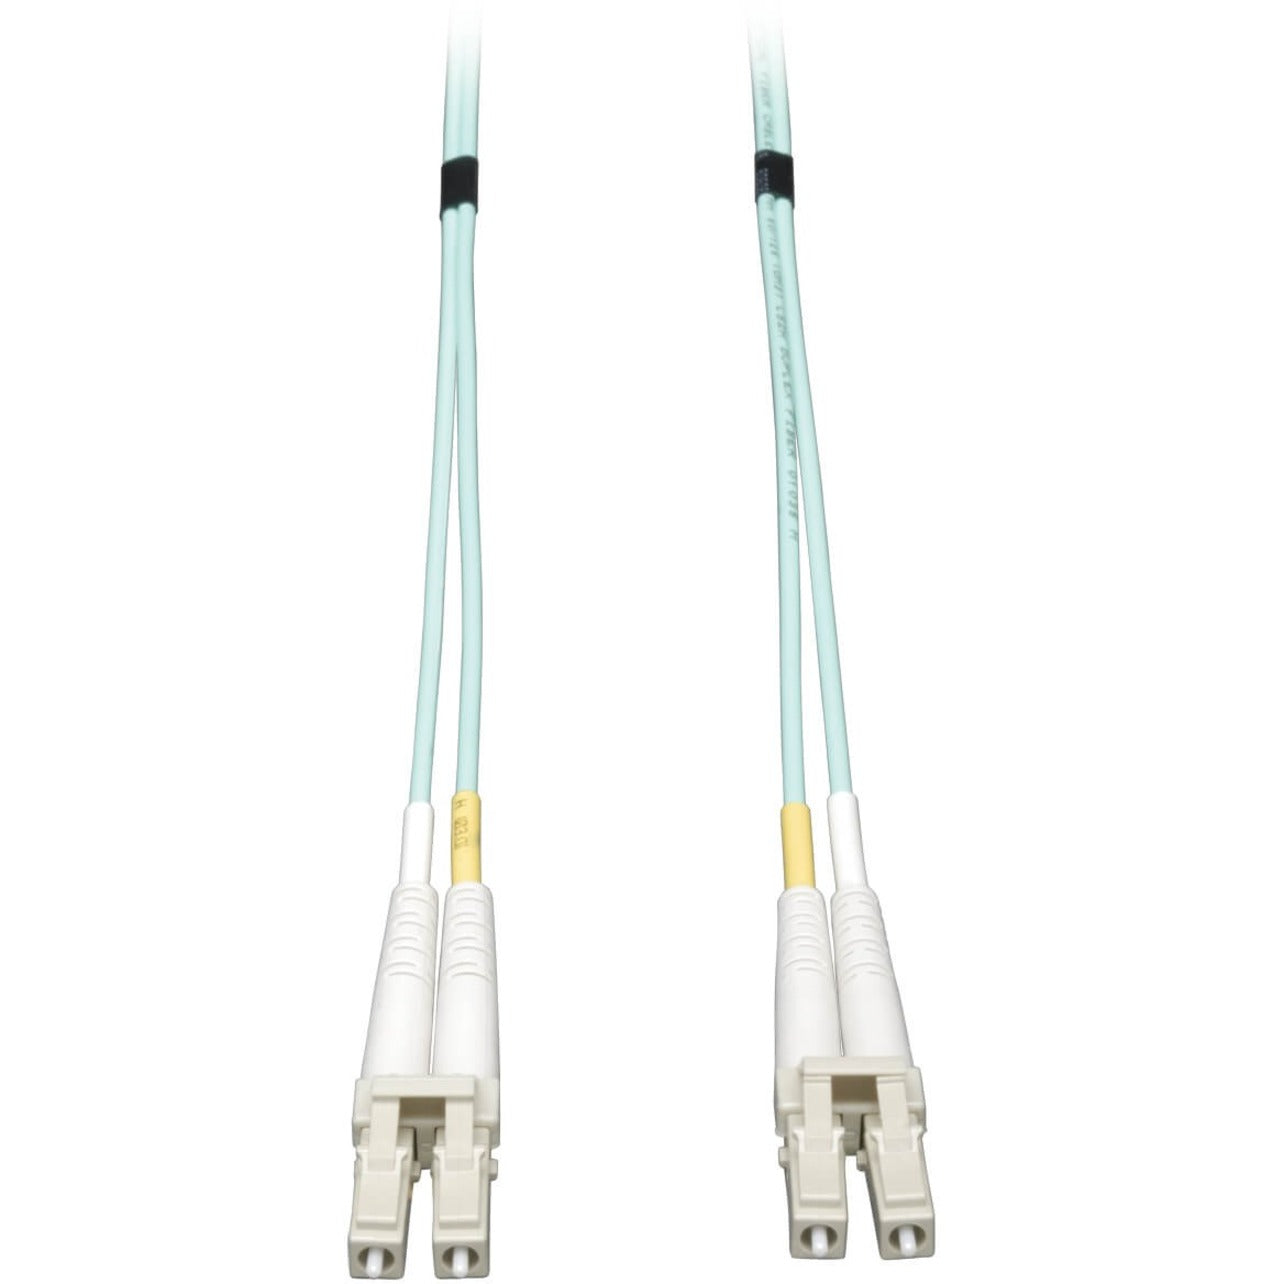 Tripp Lite N820-07M Fiber Optic Patch Cable, 23 ft, Multi-mode, Aqua